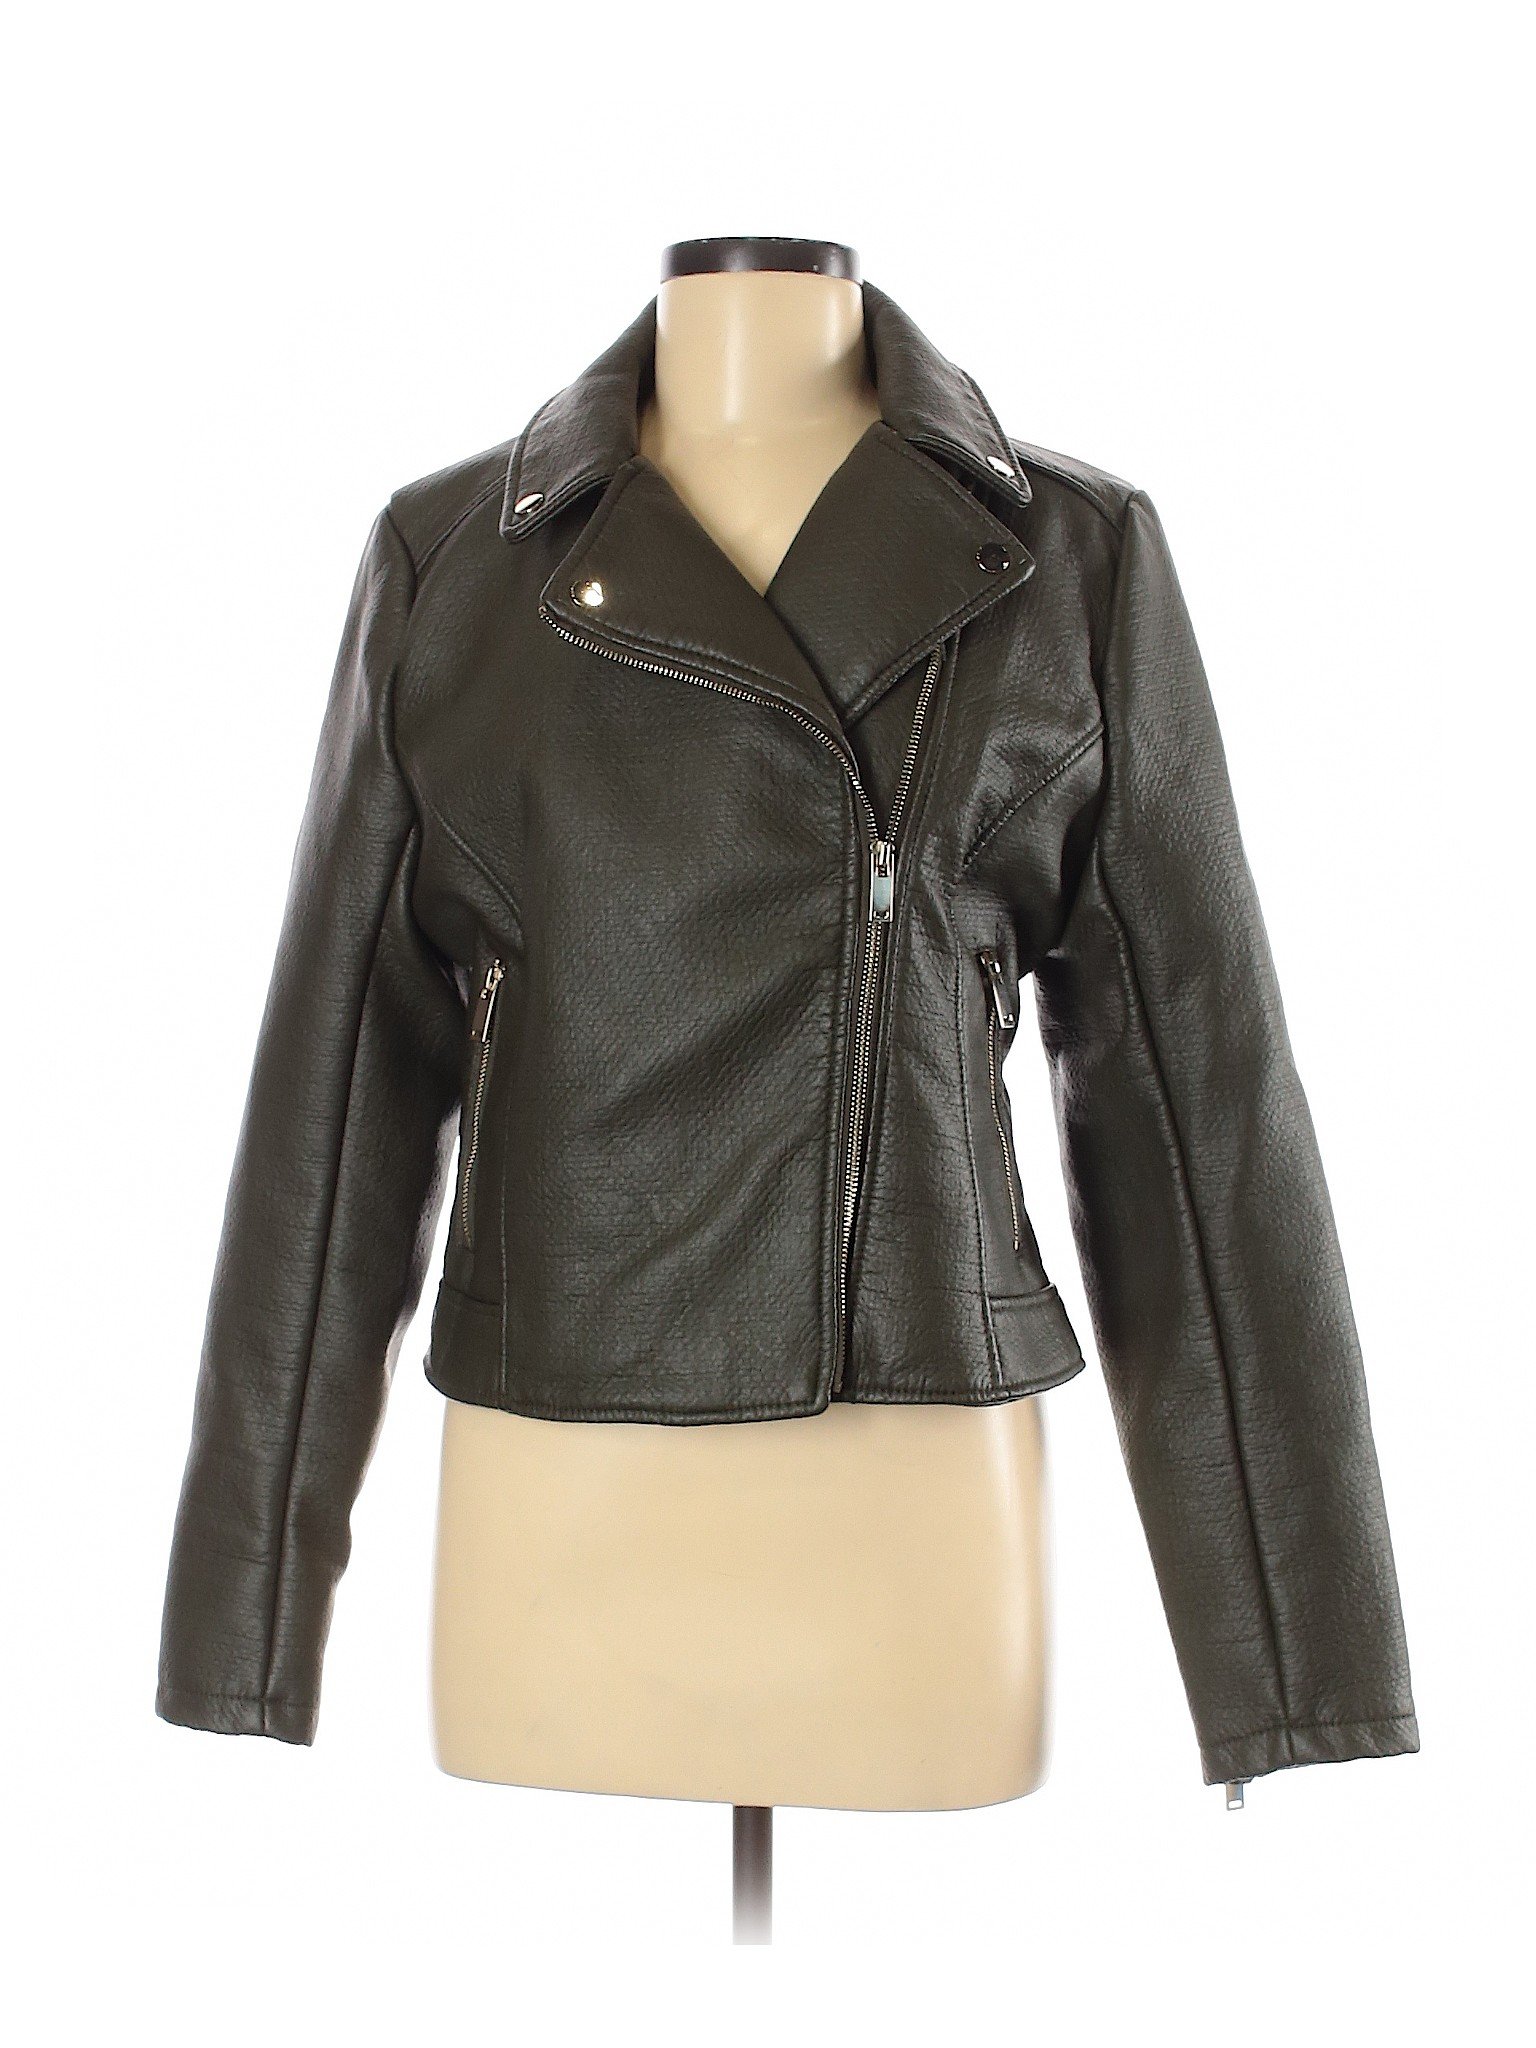 New York & Company Women Green Faux Leather Jacket M | eBay